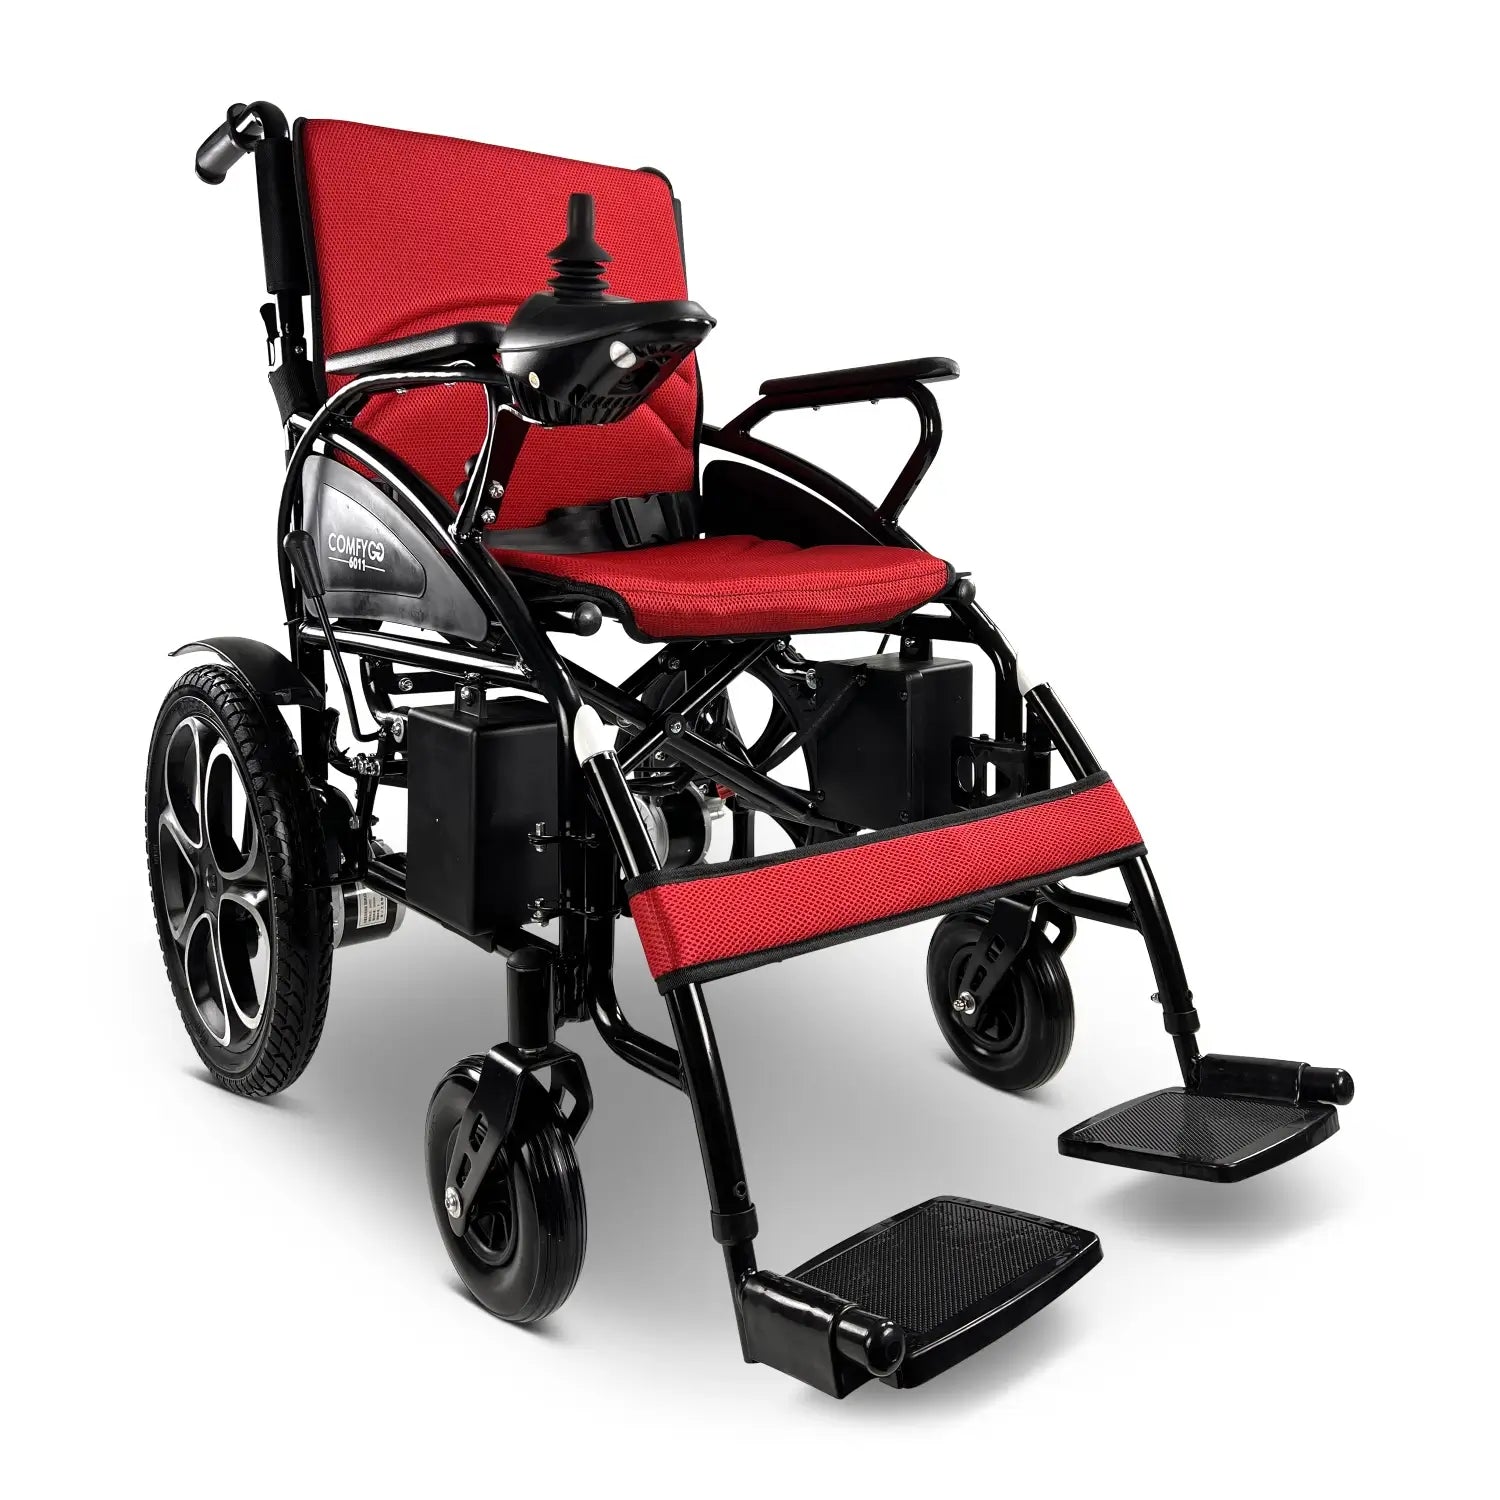 ComfyGo 6011 Folding Electric Wheelchair Electric Wheelchair ComfyGo Red 13 Miles Range (12AH Battery) 